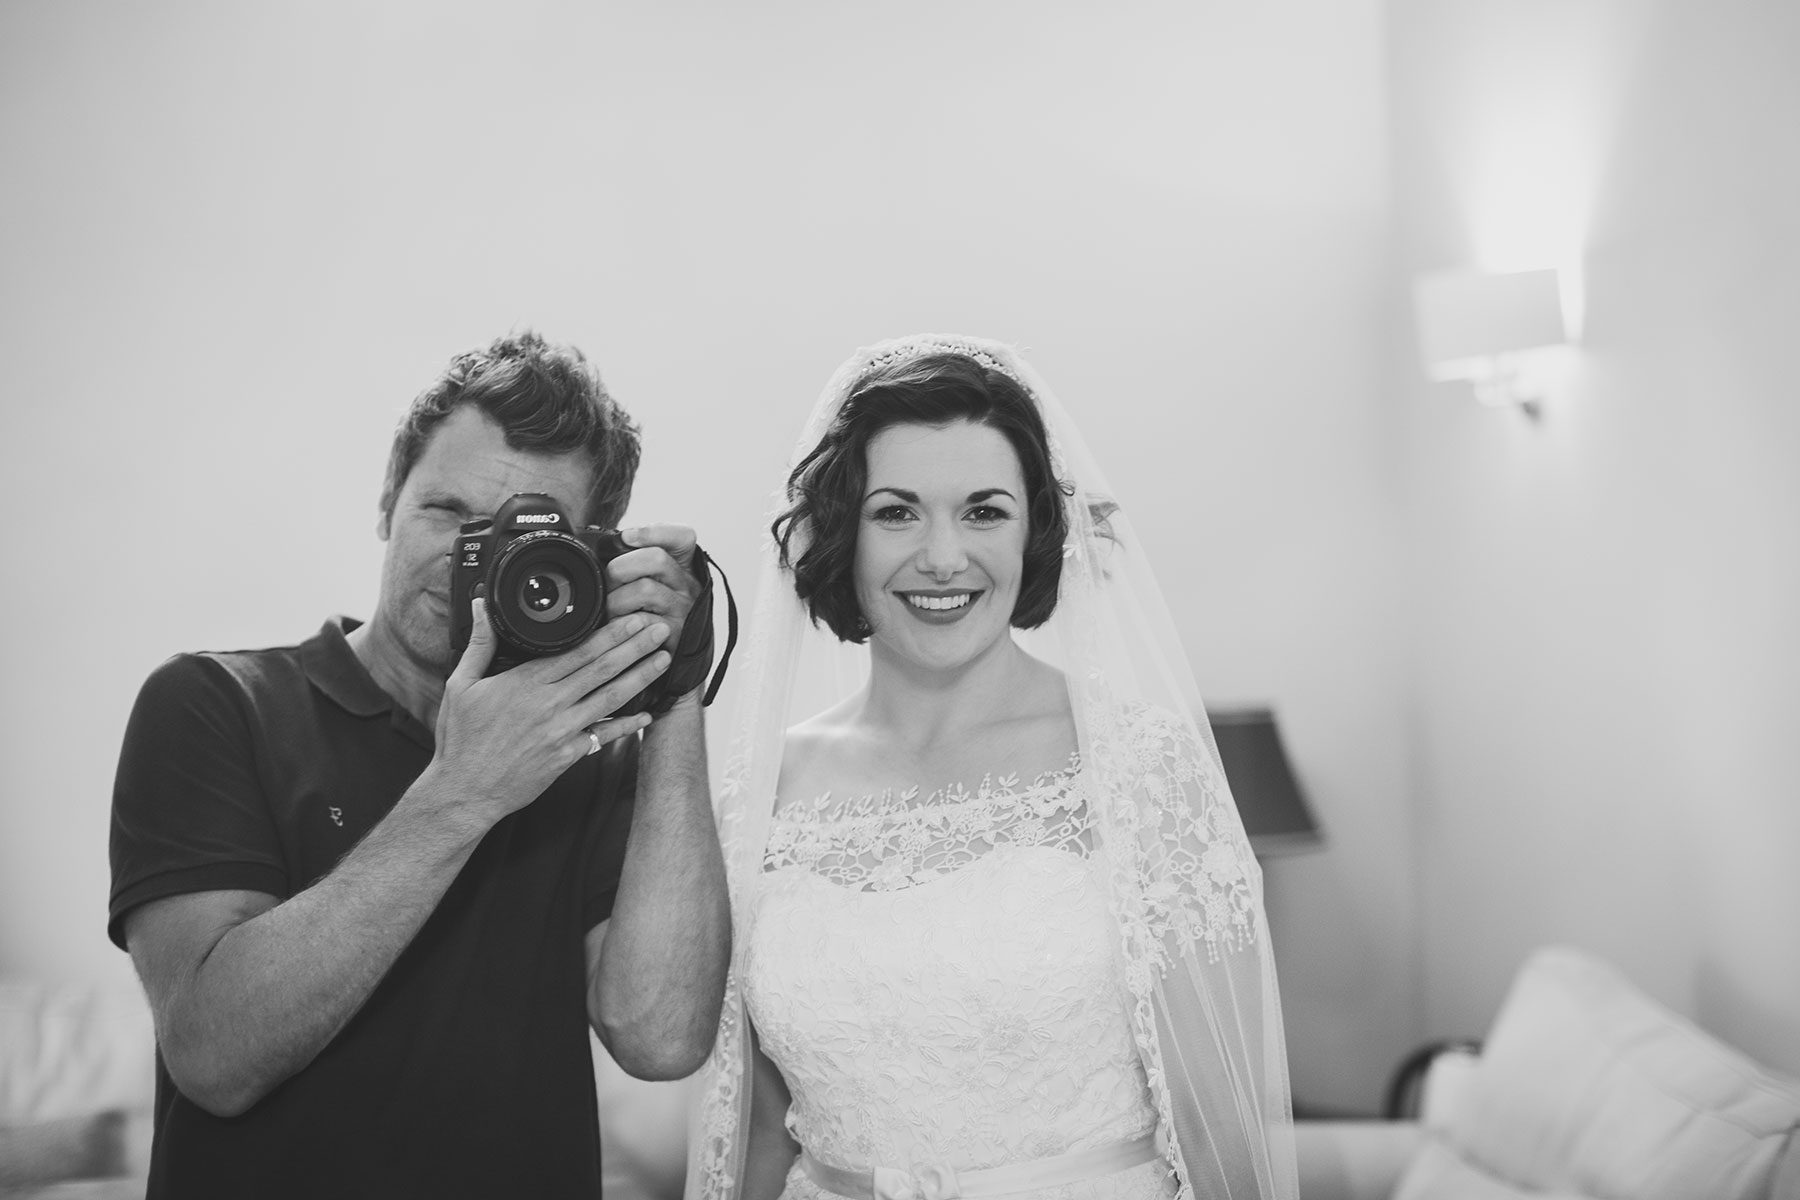 The bride and I - Reportage Wedding at Upcote Barn | Bullit